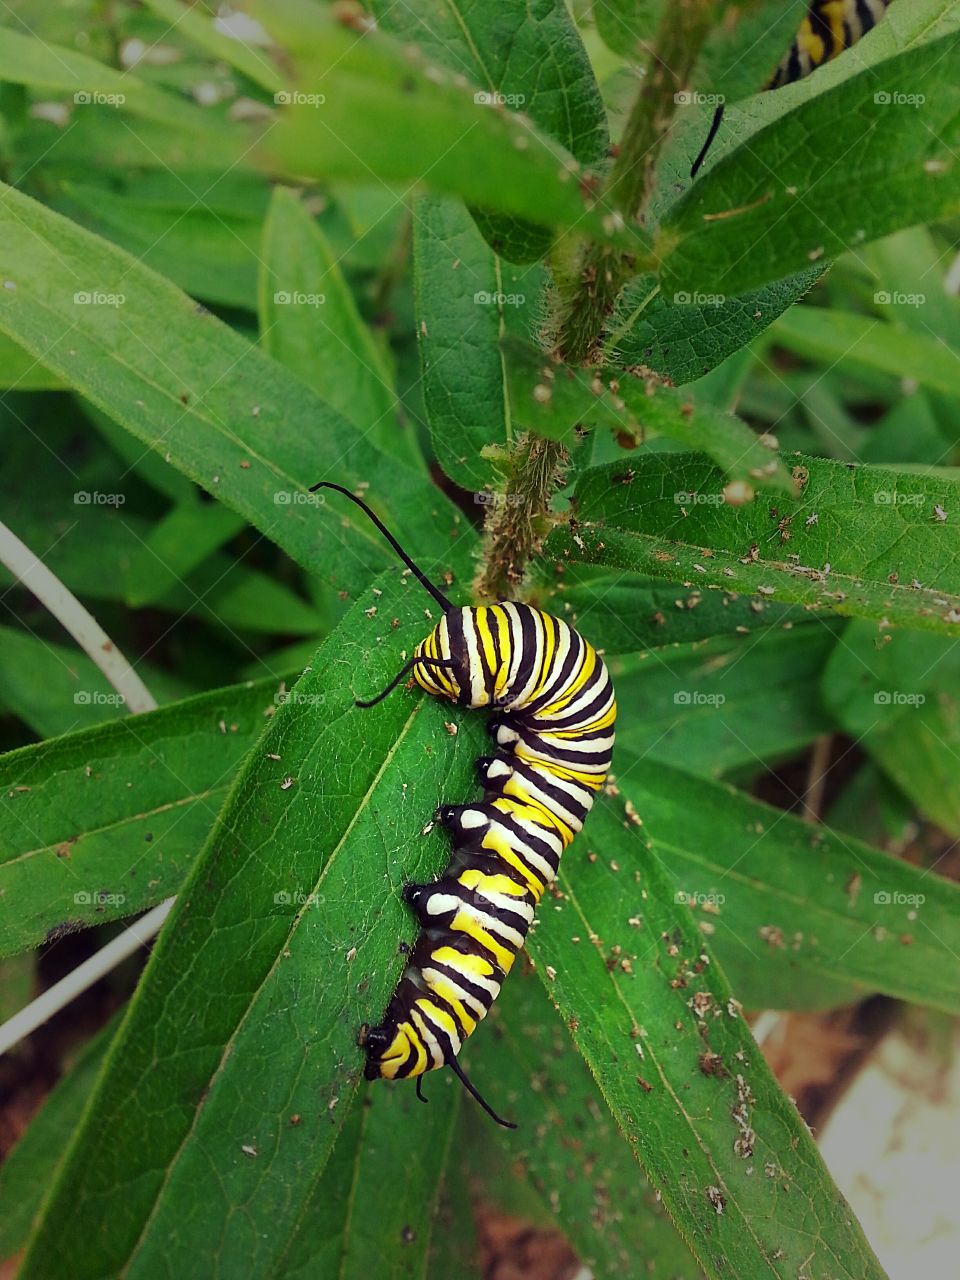 A caterpillar enjoys munching on a leaf.